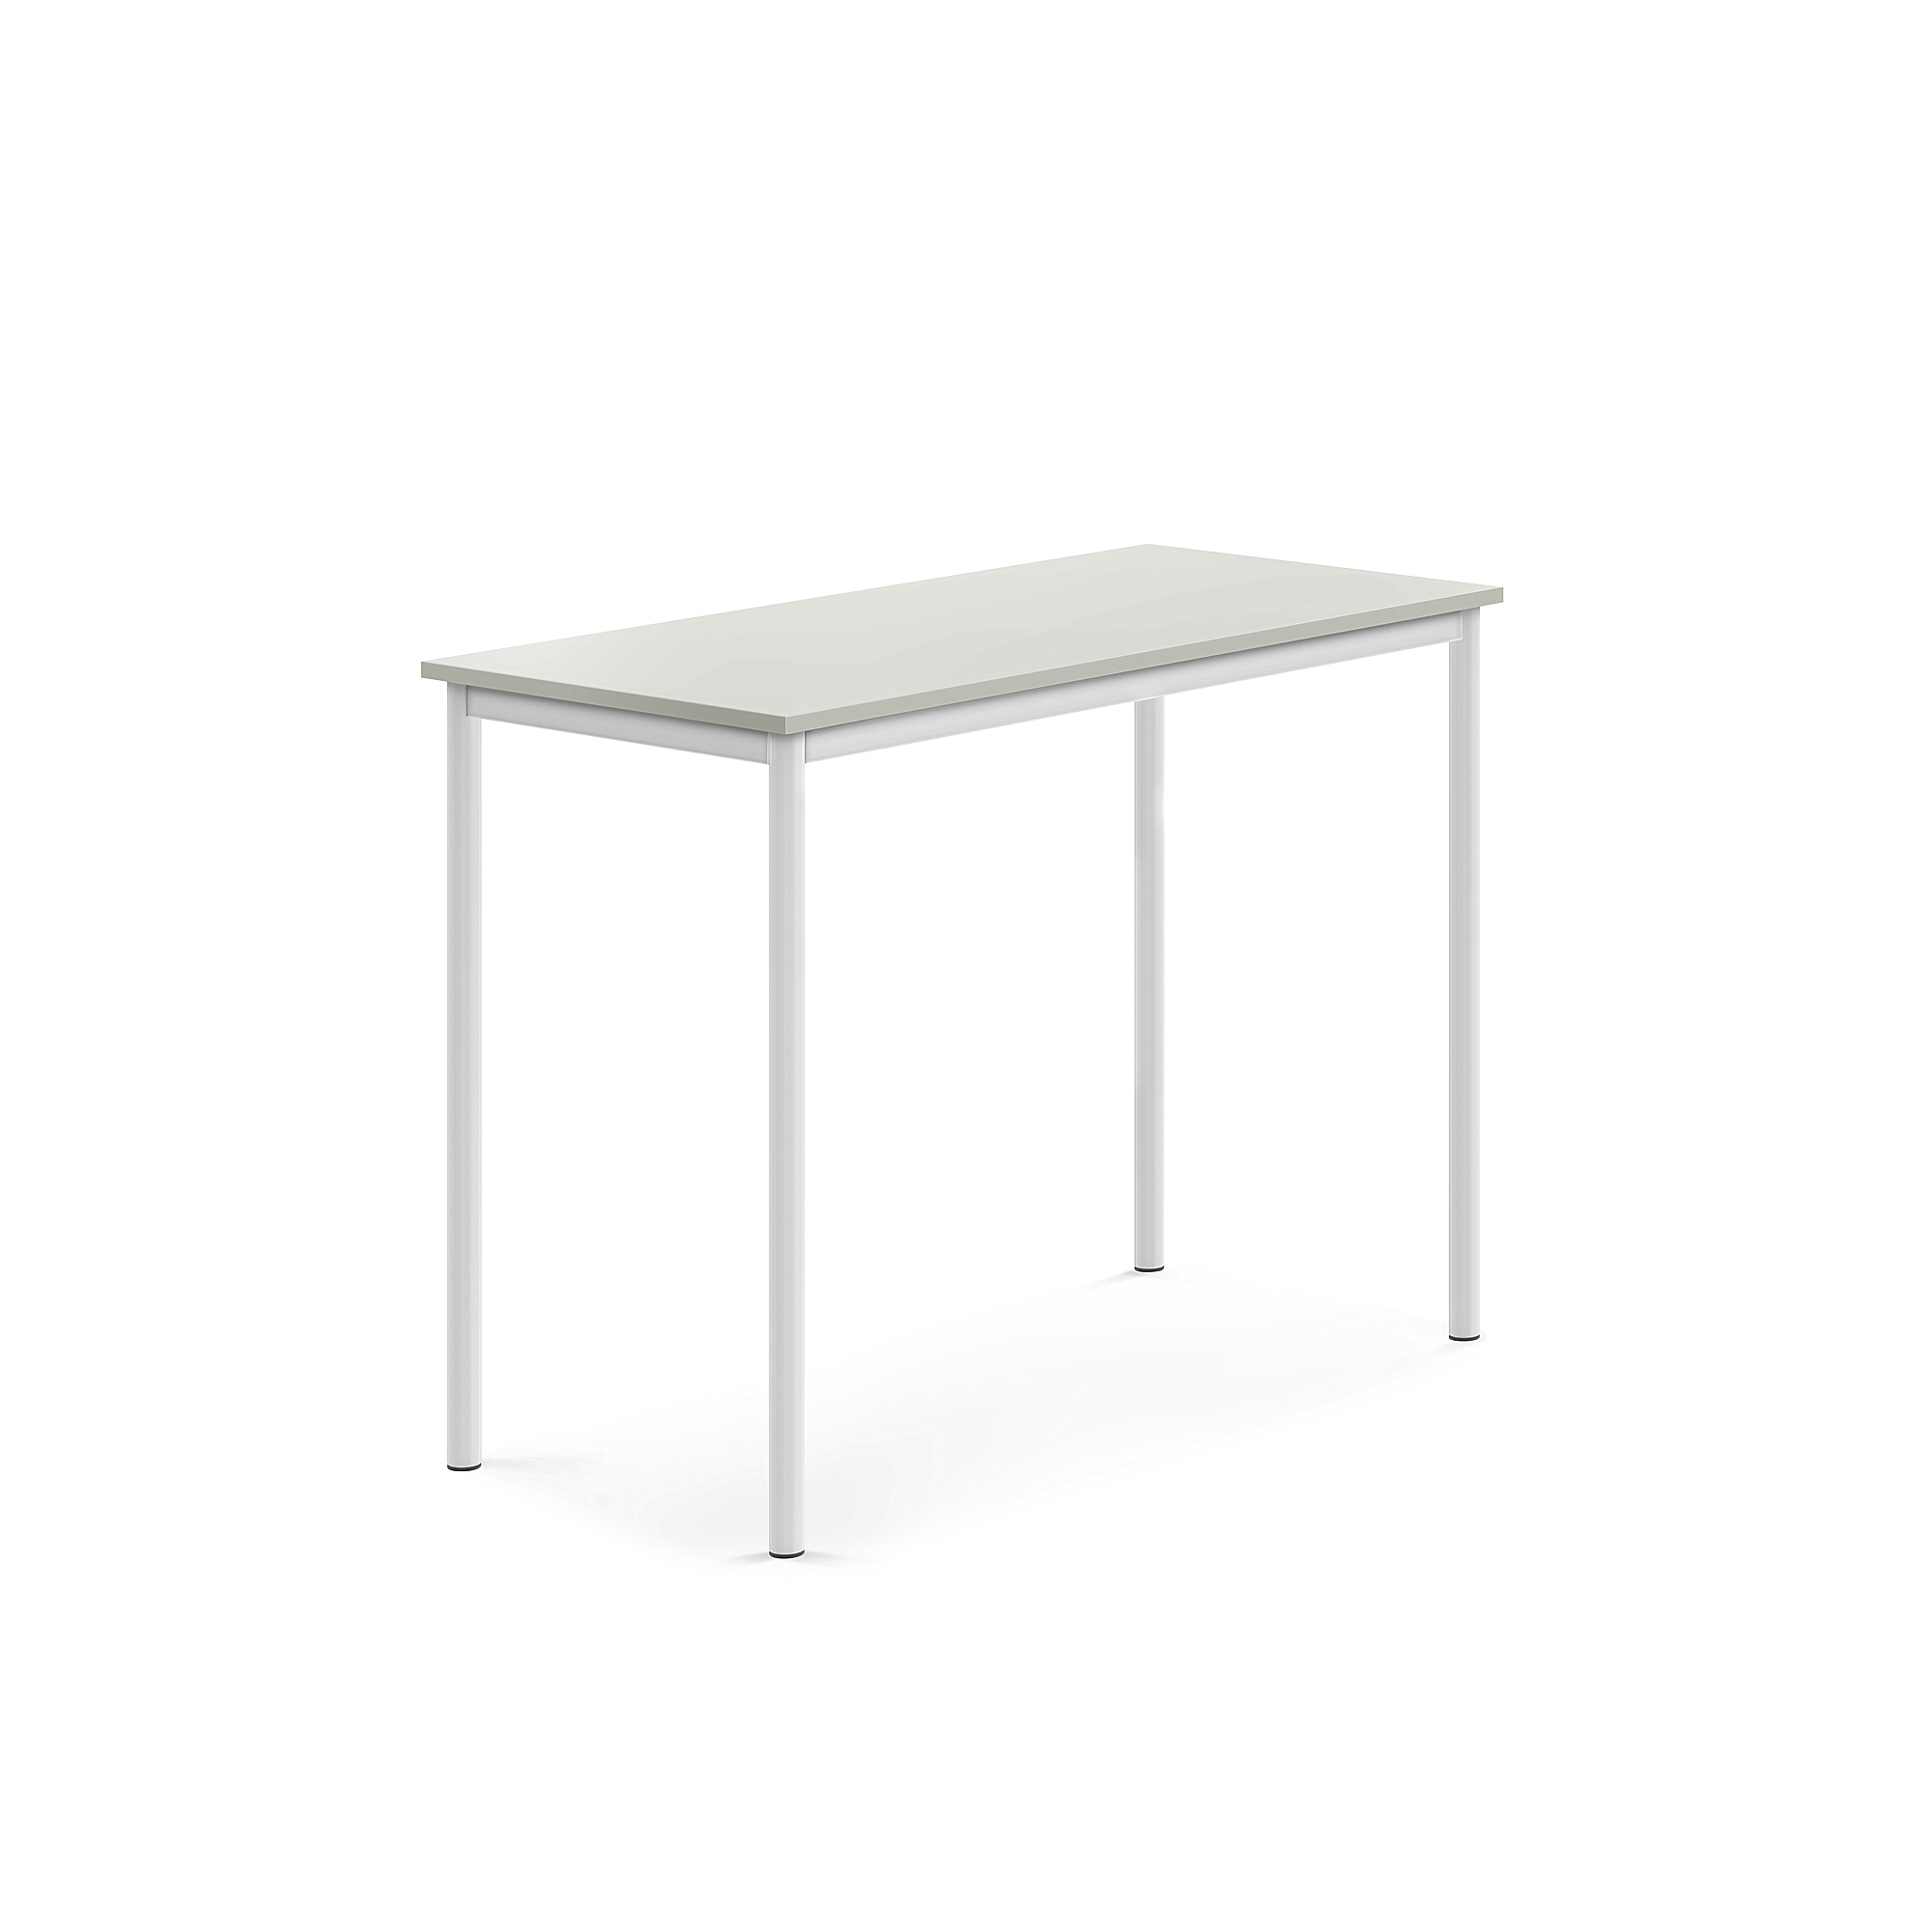 Stůl SONITUS, 1200x600x900 mm, bílé nohy, HPL deska tlumící hluk, šedá